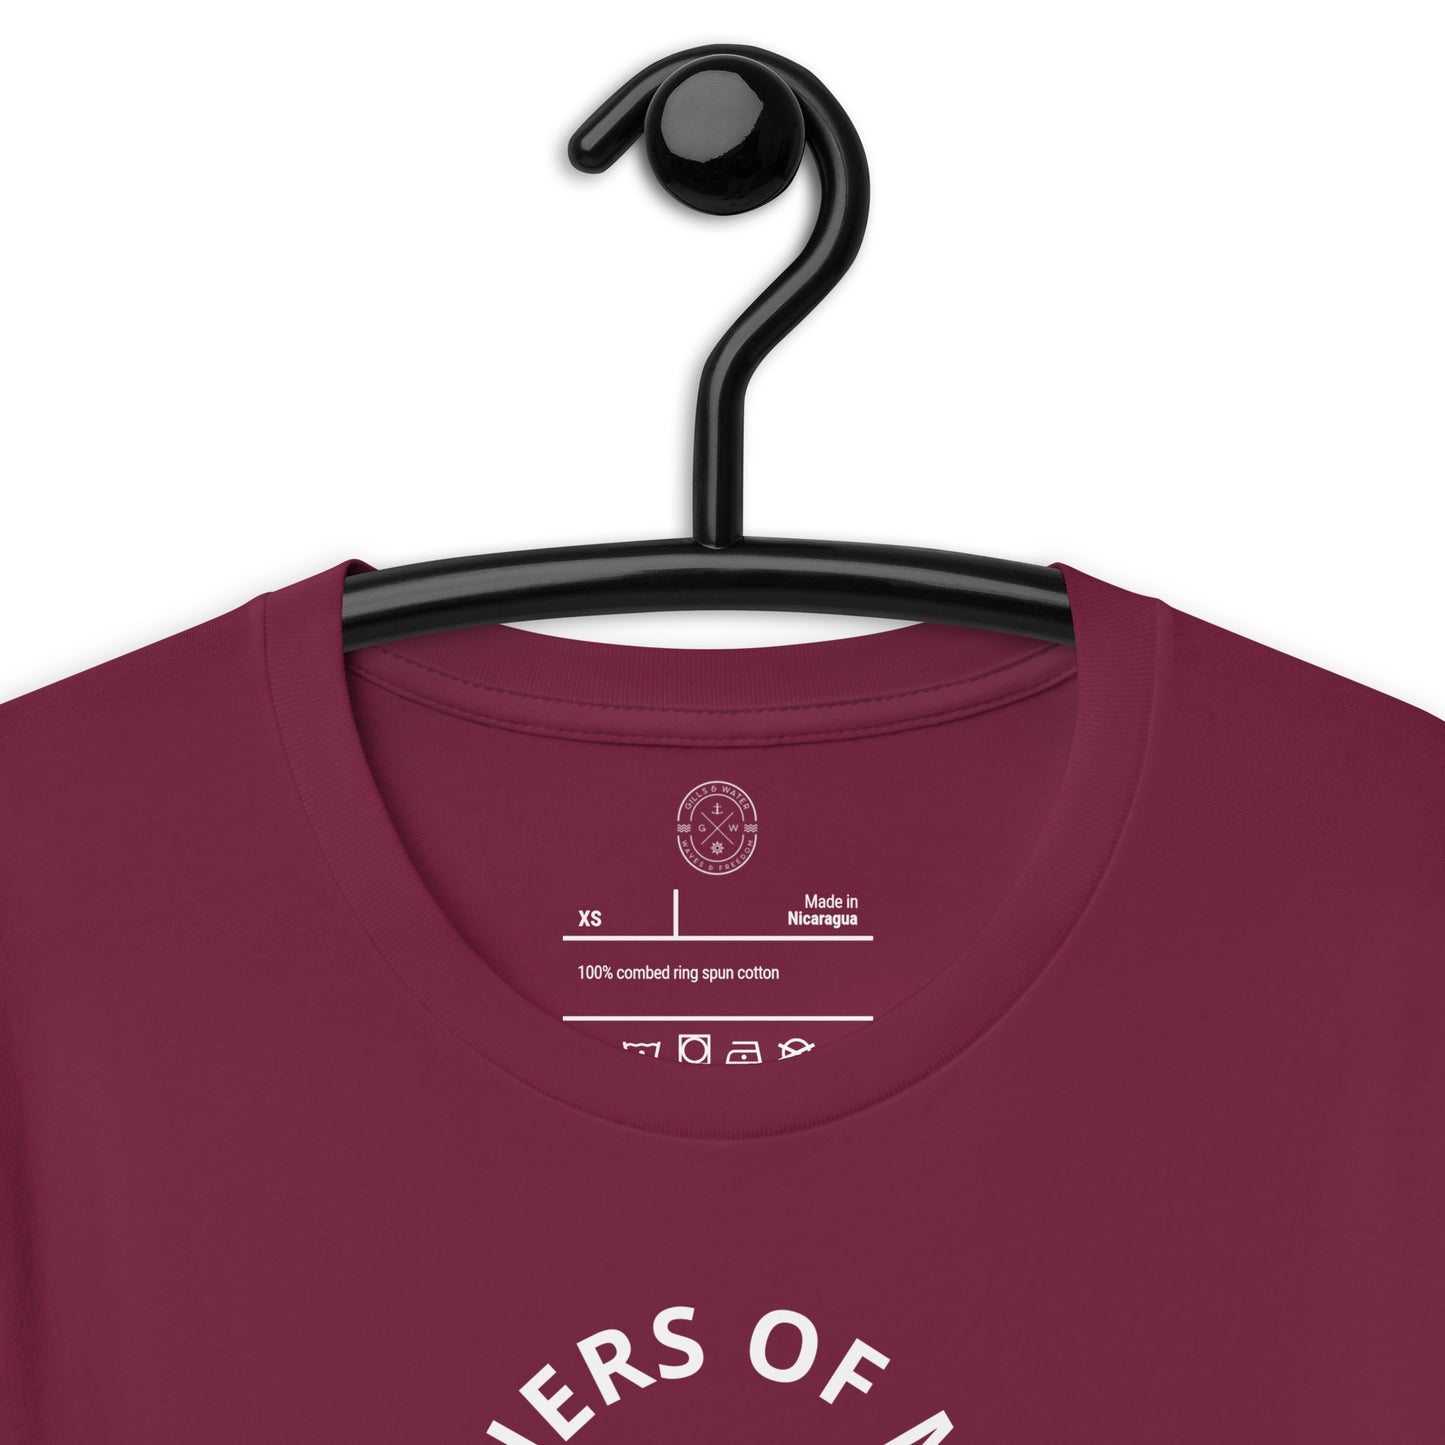 FISHERS OF MEN: Premium Unisex t-shirt by Gills & Water